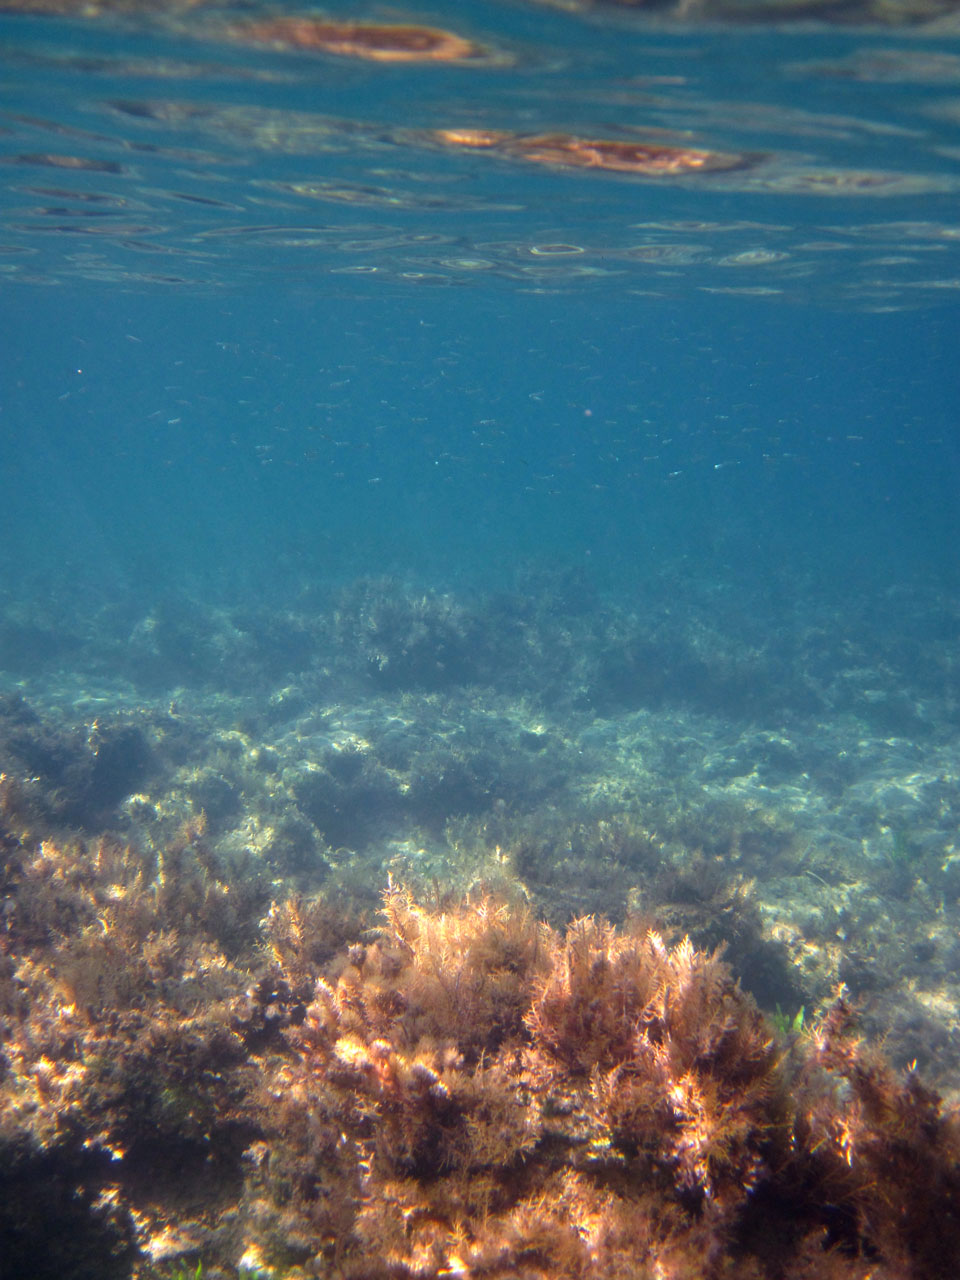 life underwater - fish and seaweed